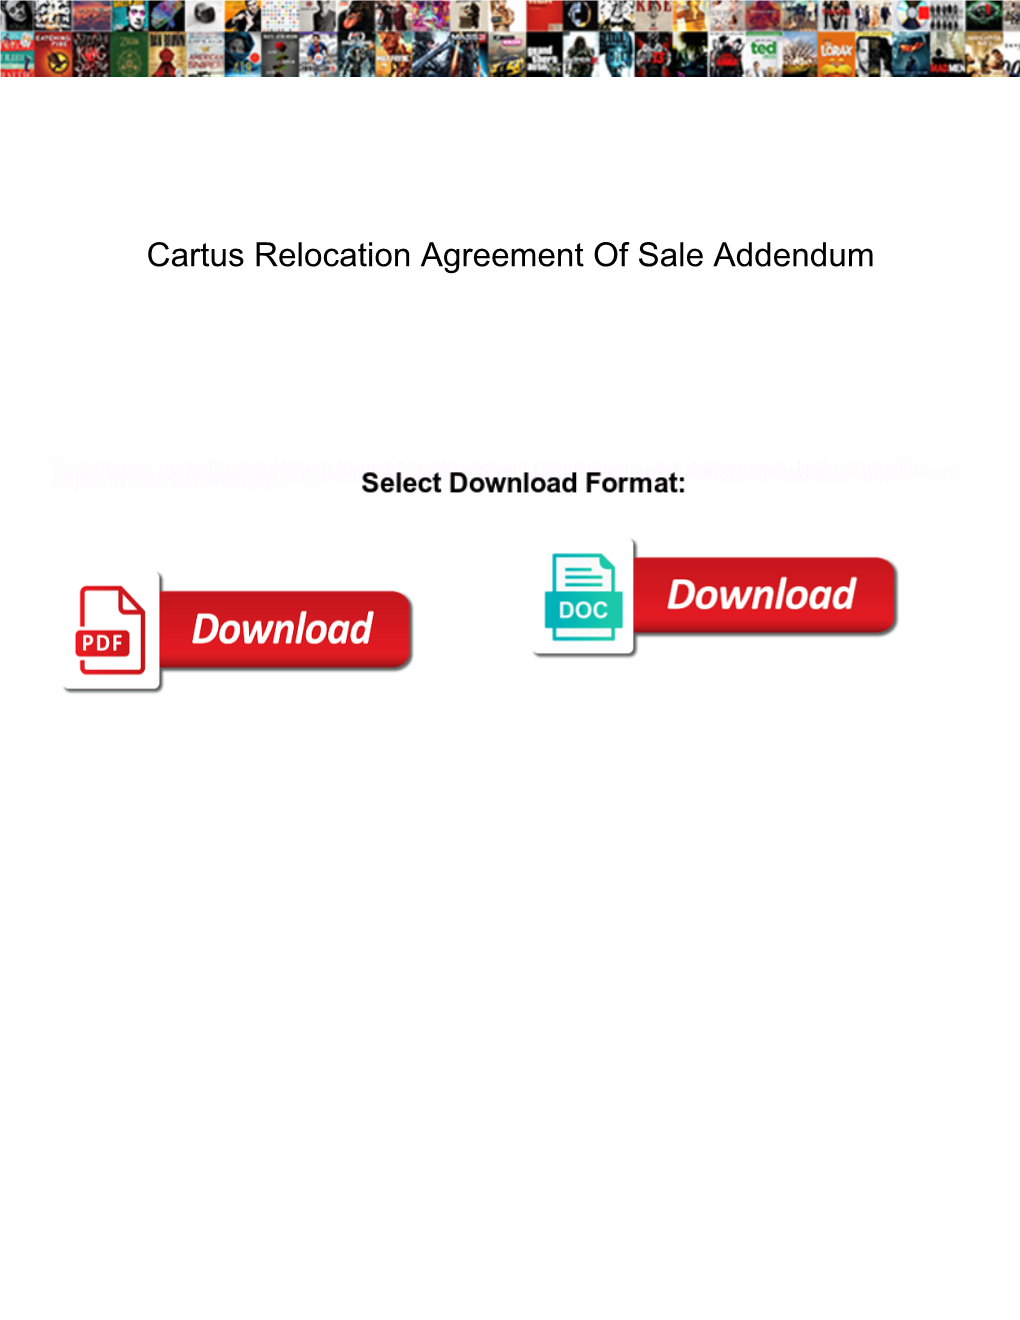 Cartus Relocation Agreement of Sale Addendum